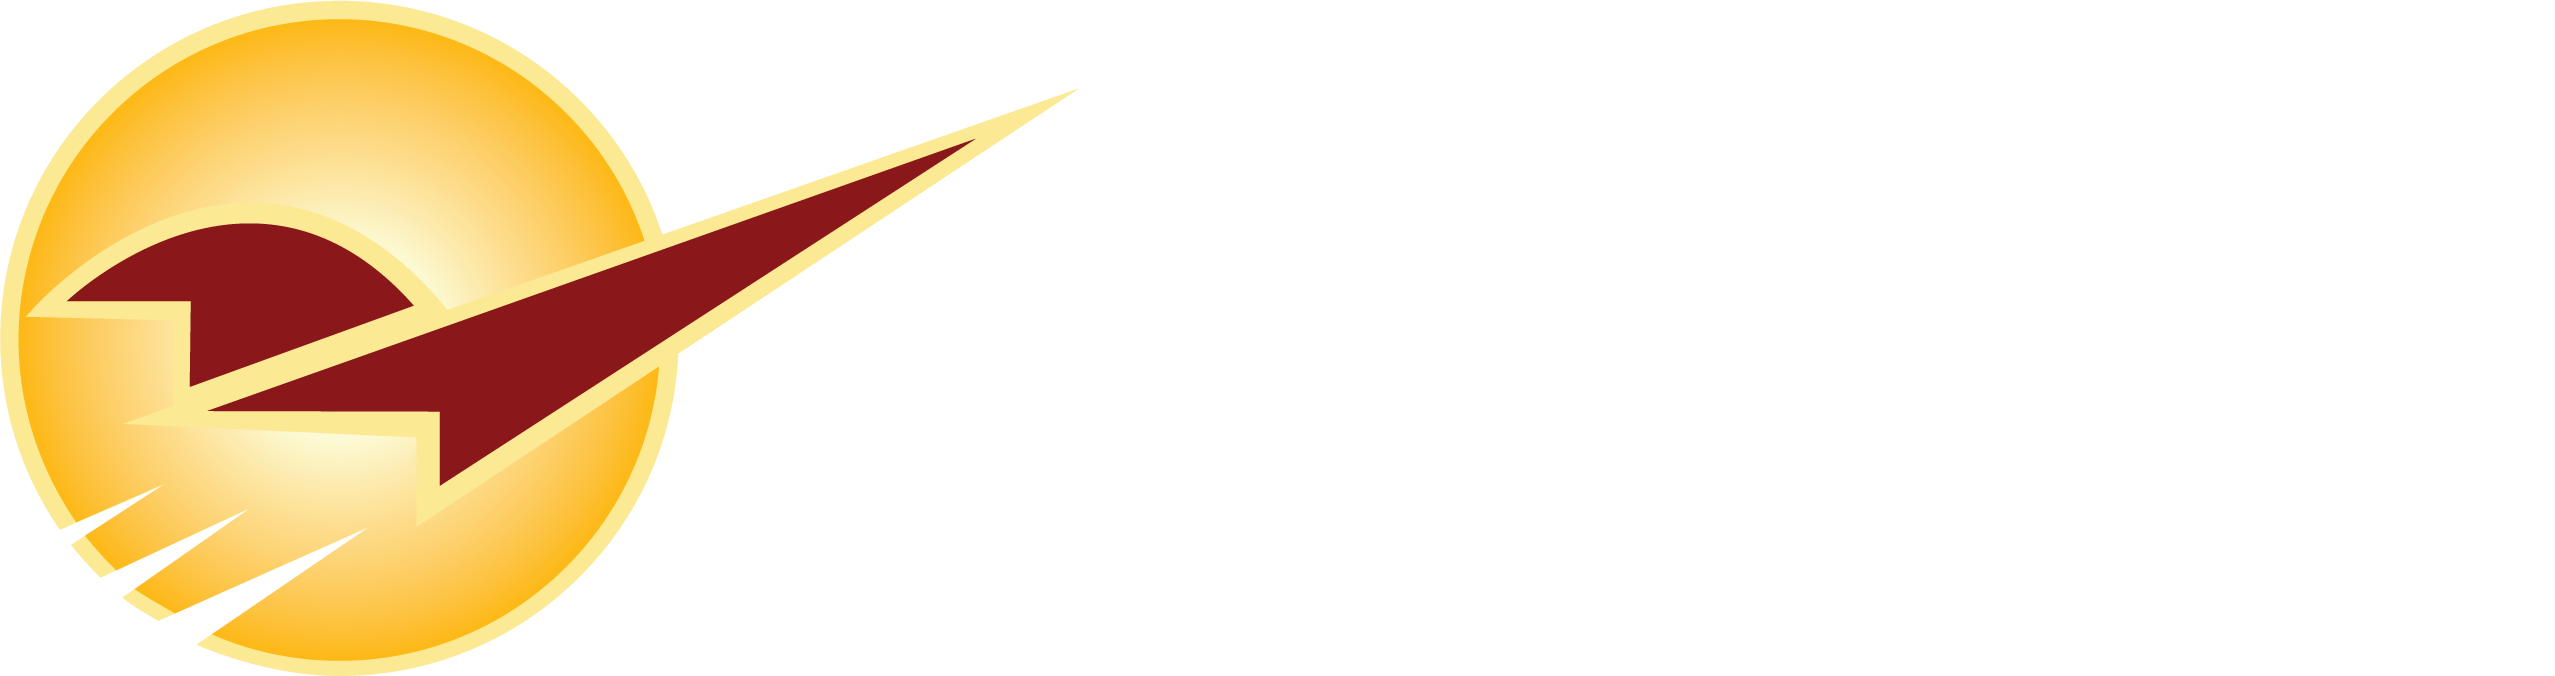 Paladin Data Corporation logo